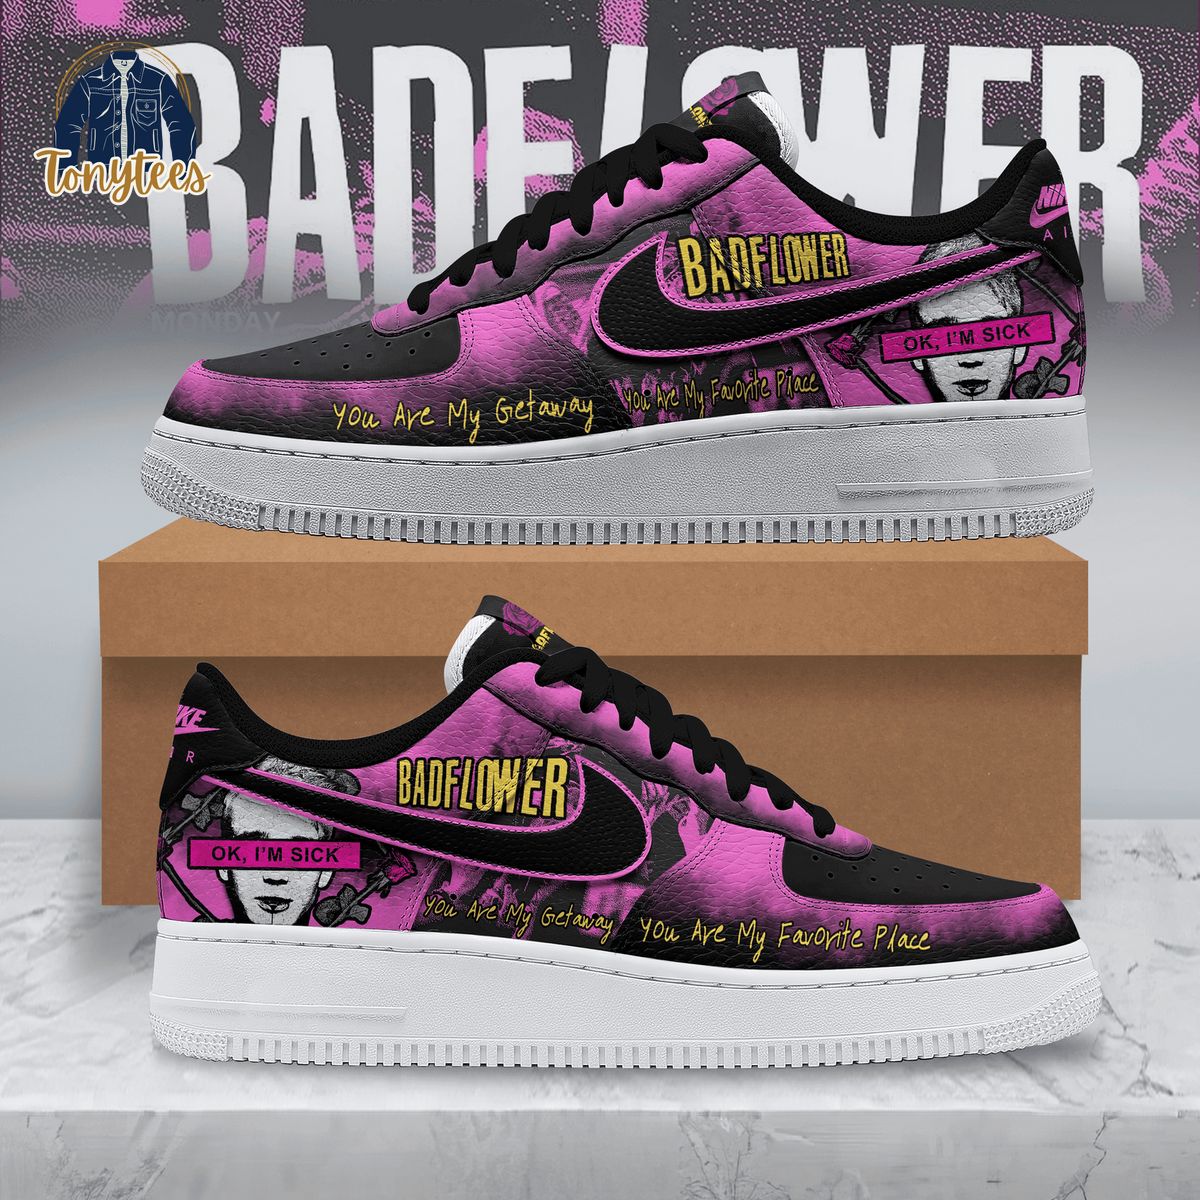 Badflower ok i’m sick album air force 1 sneaker